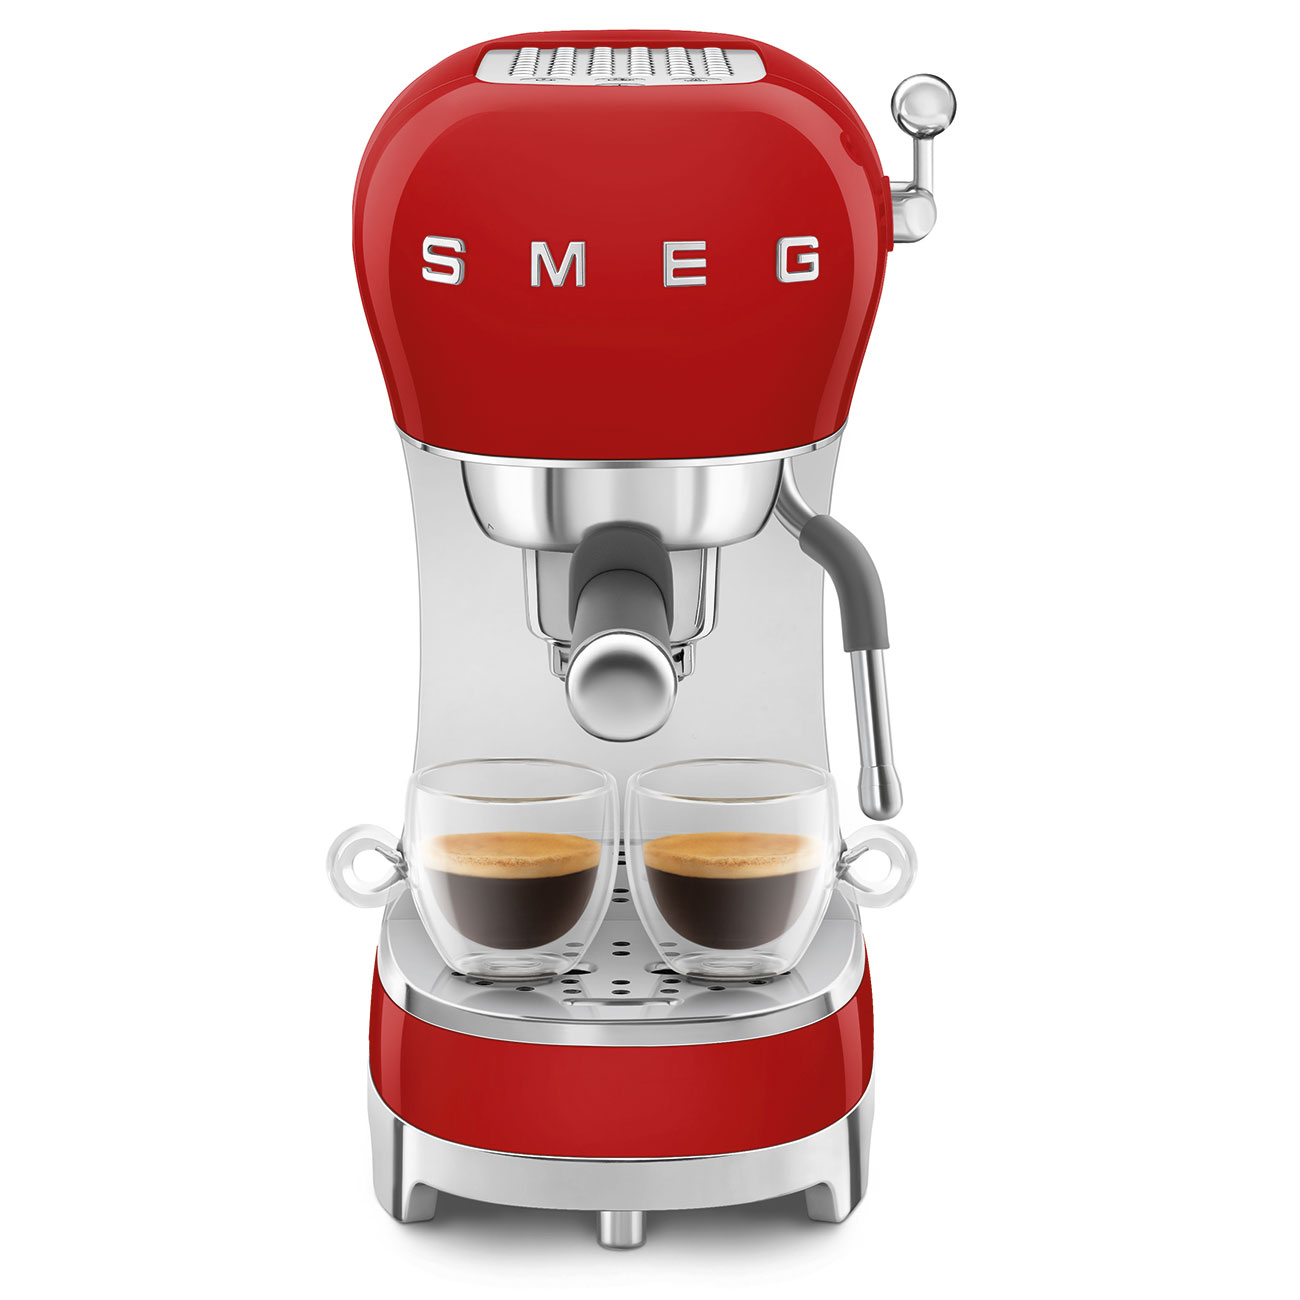 Smeg Red Espresso Manual Coffee Machine with Steam Wand_5